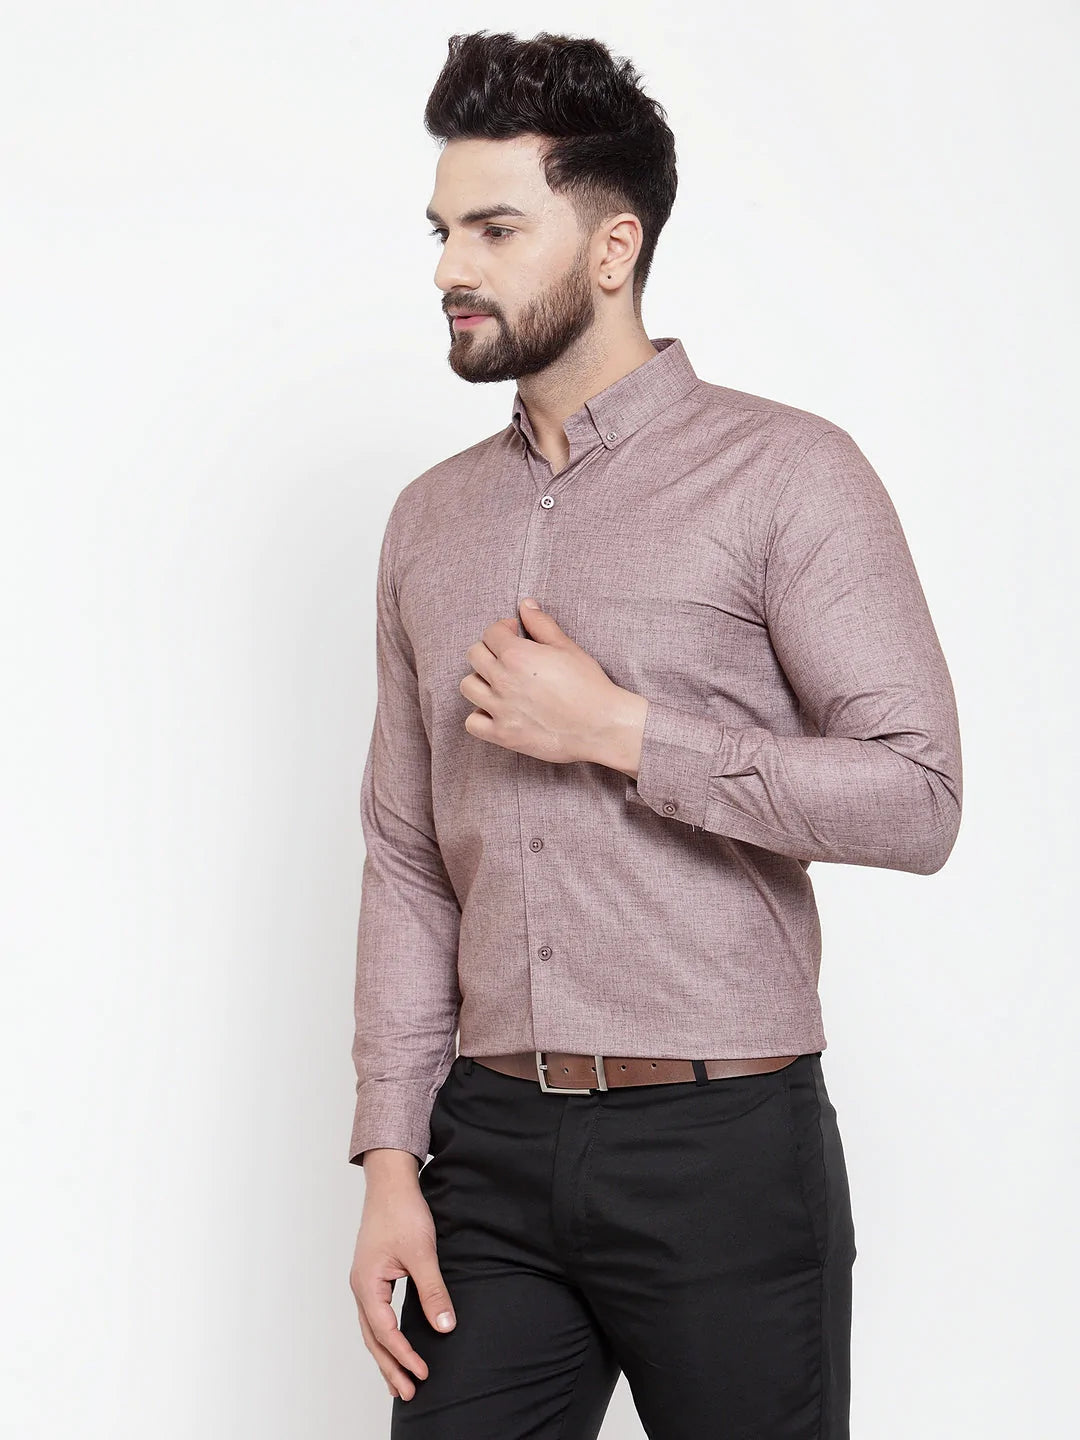 Jainish Brown Men's Cotton Solid Button Down Formal Shirts ( SF 753Mauve )